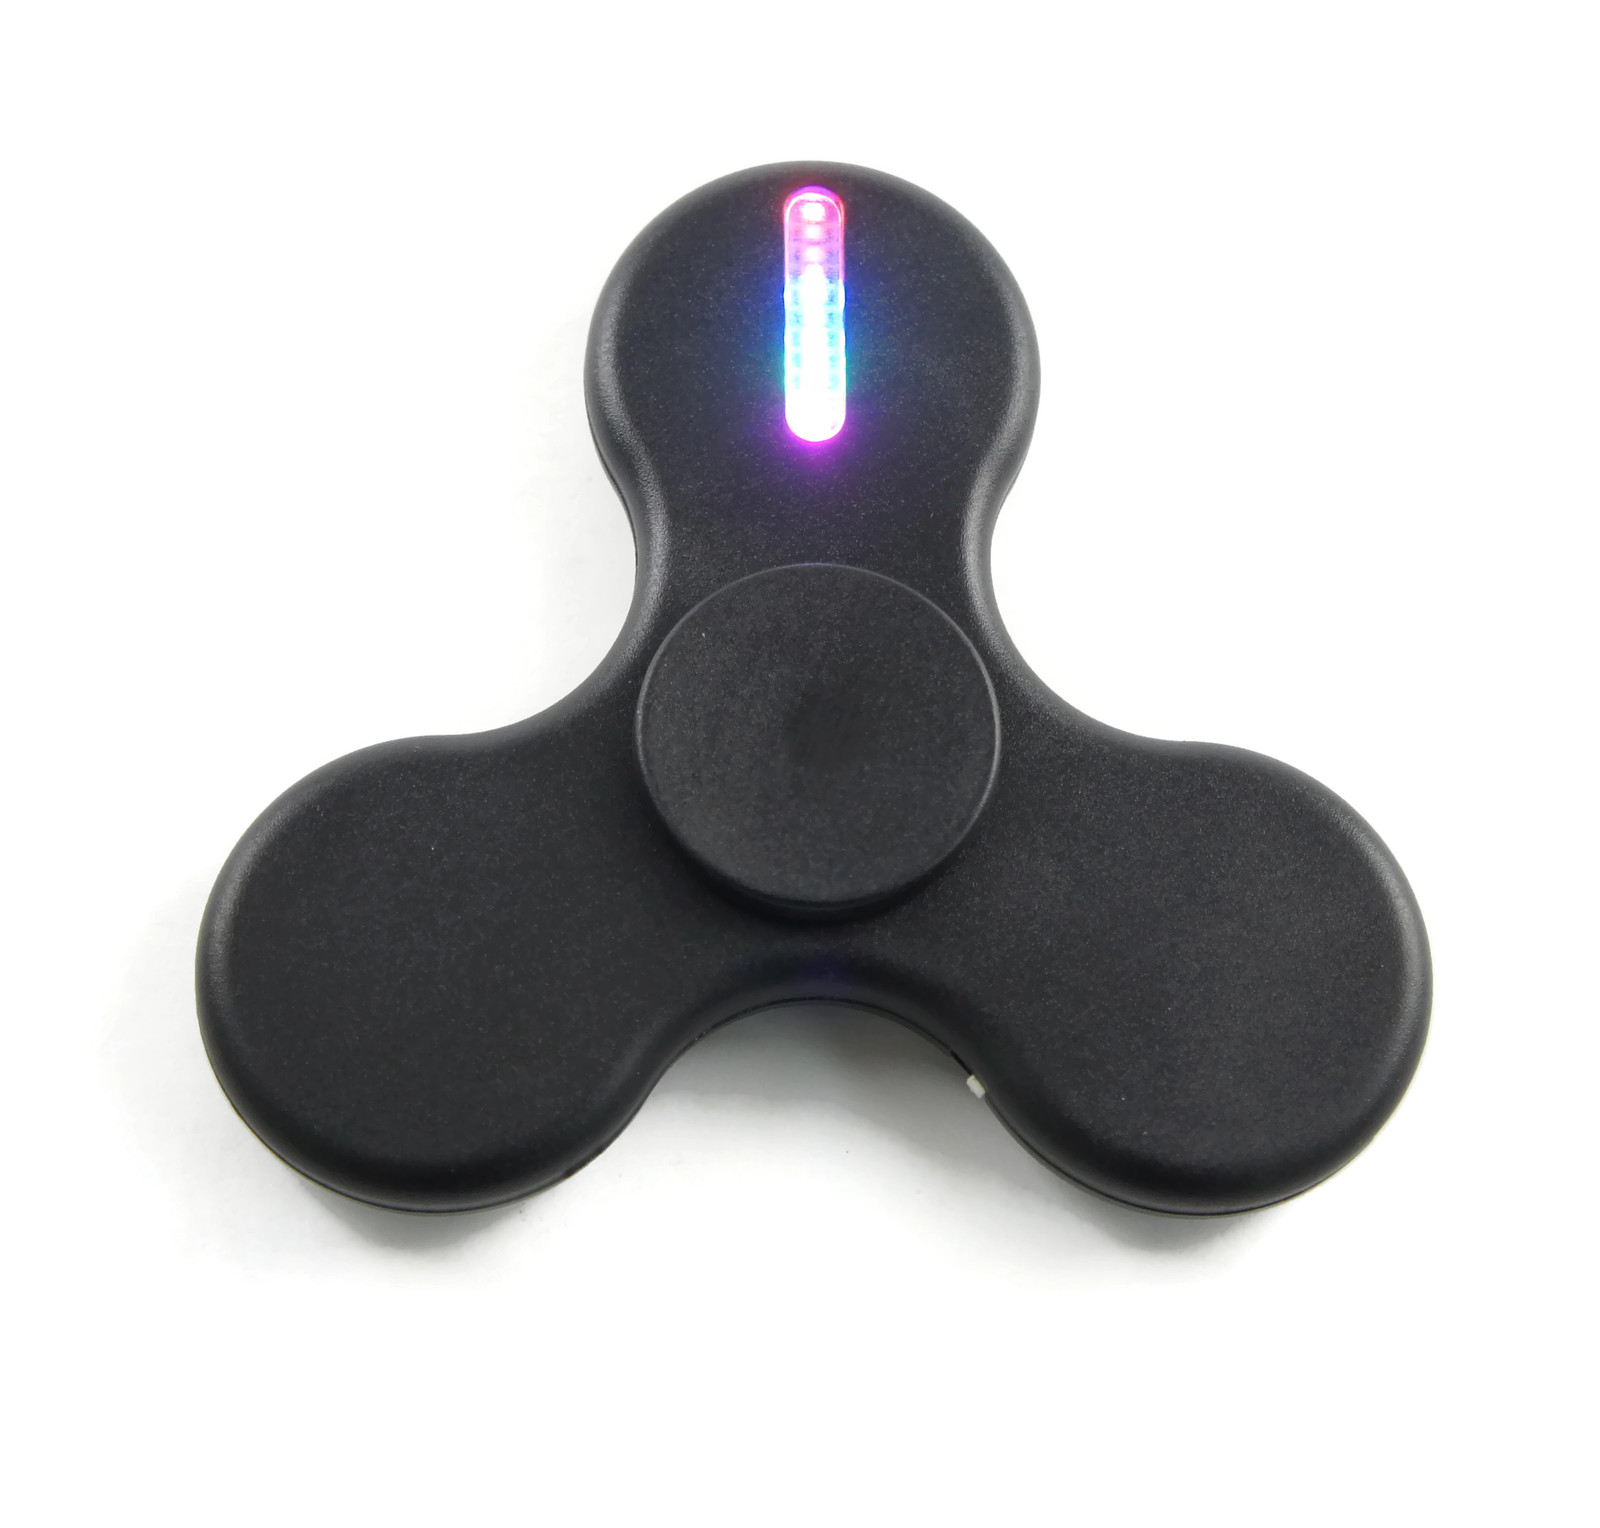 Fidget Fi-Jit Hand Spinner Stress Relief Toy Black /& Red Splatter Tri-Spinner